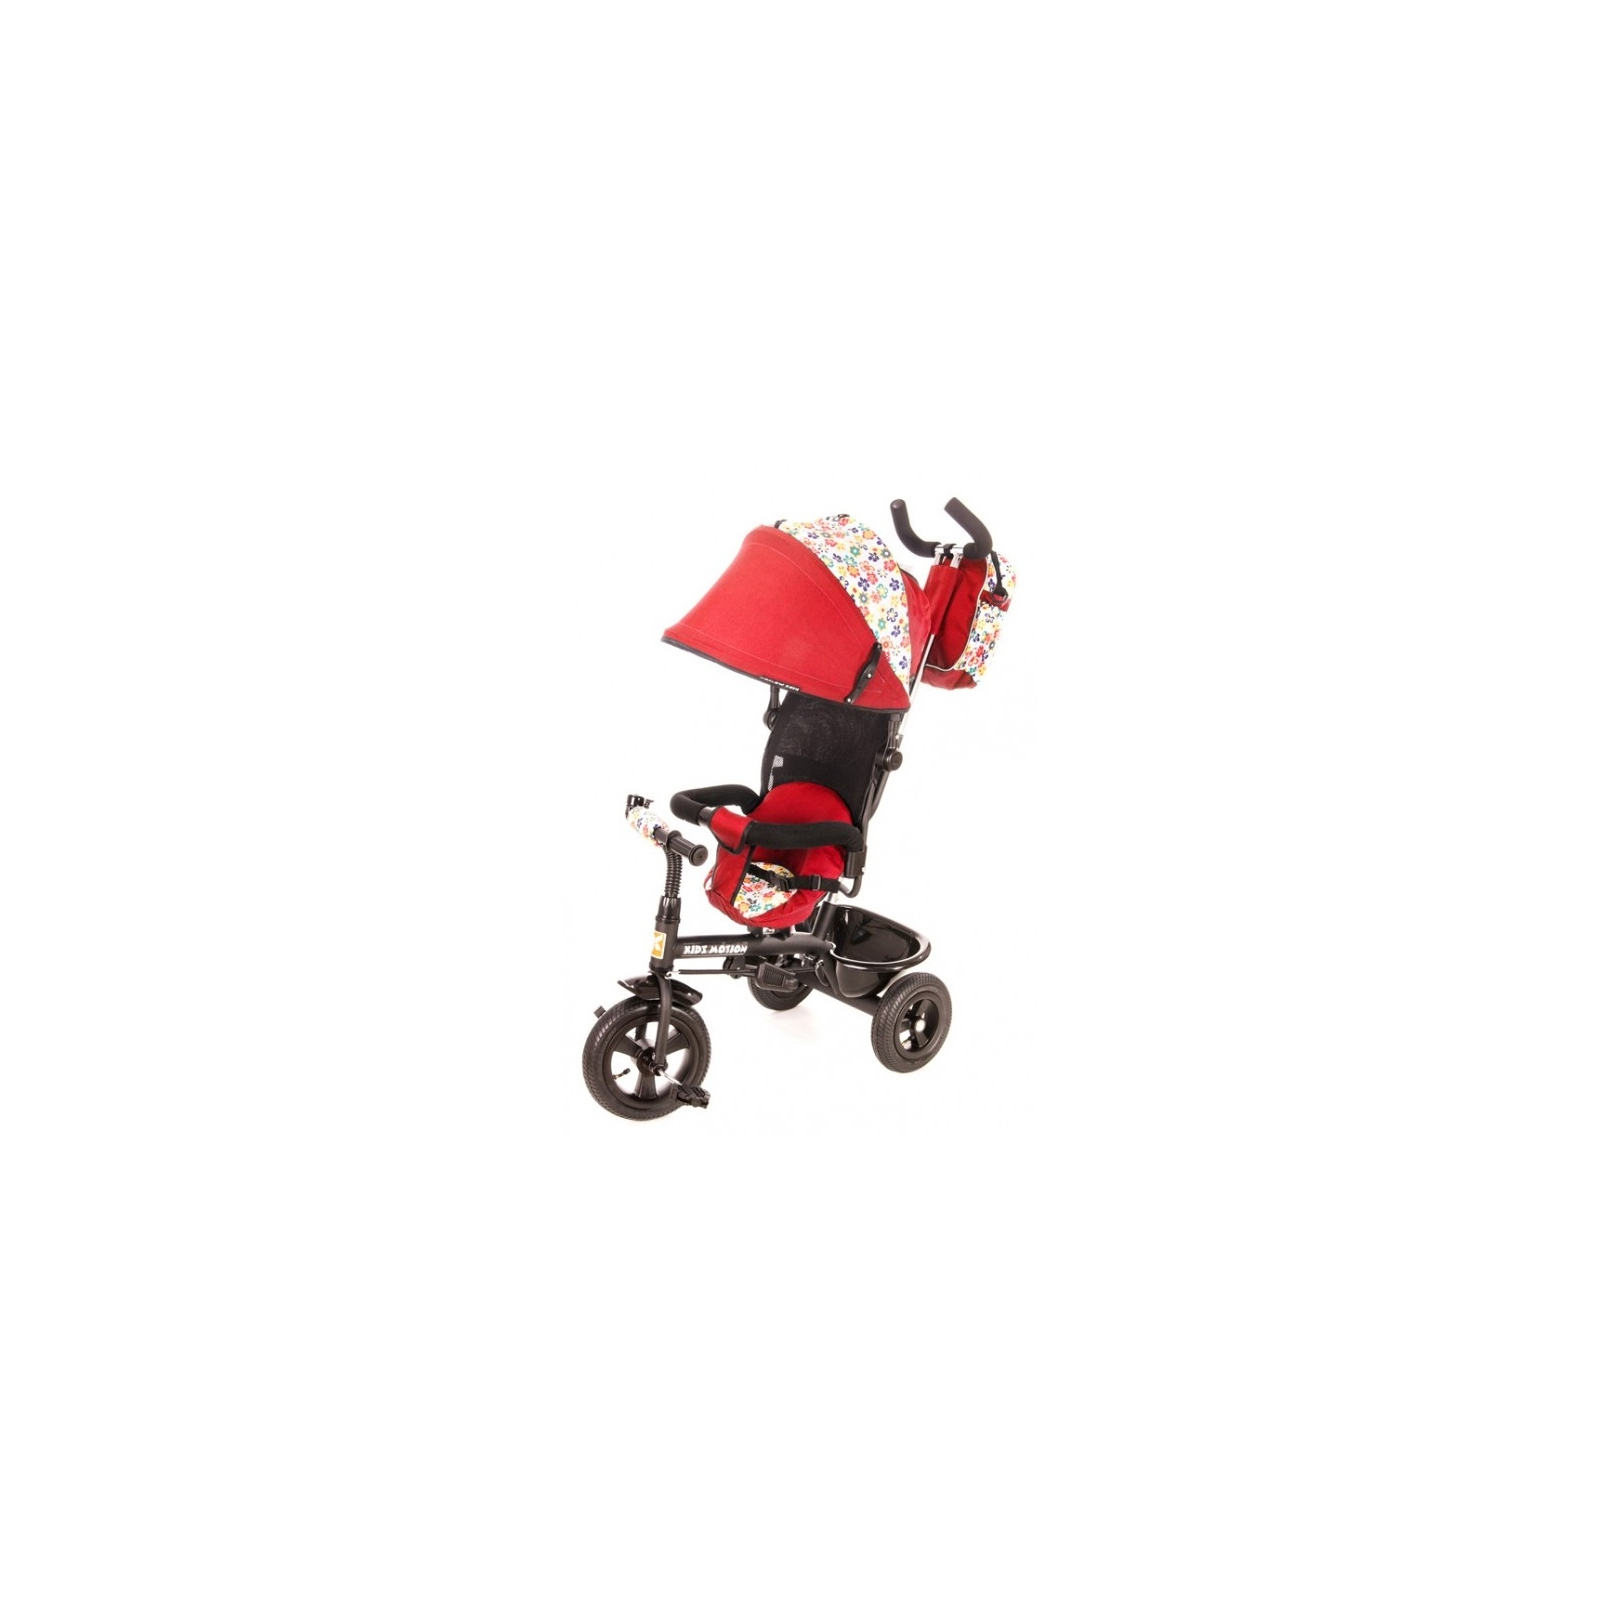 Дитячий велосипед KidzMotion Tobi Venture RED (115002/red)